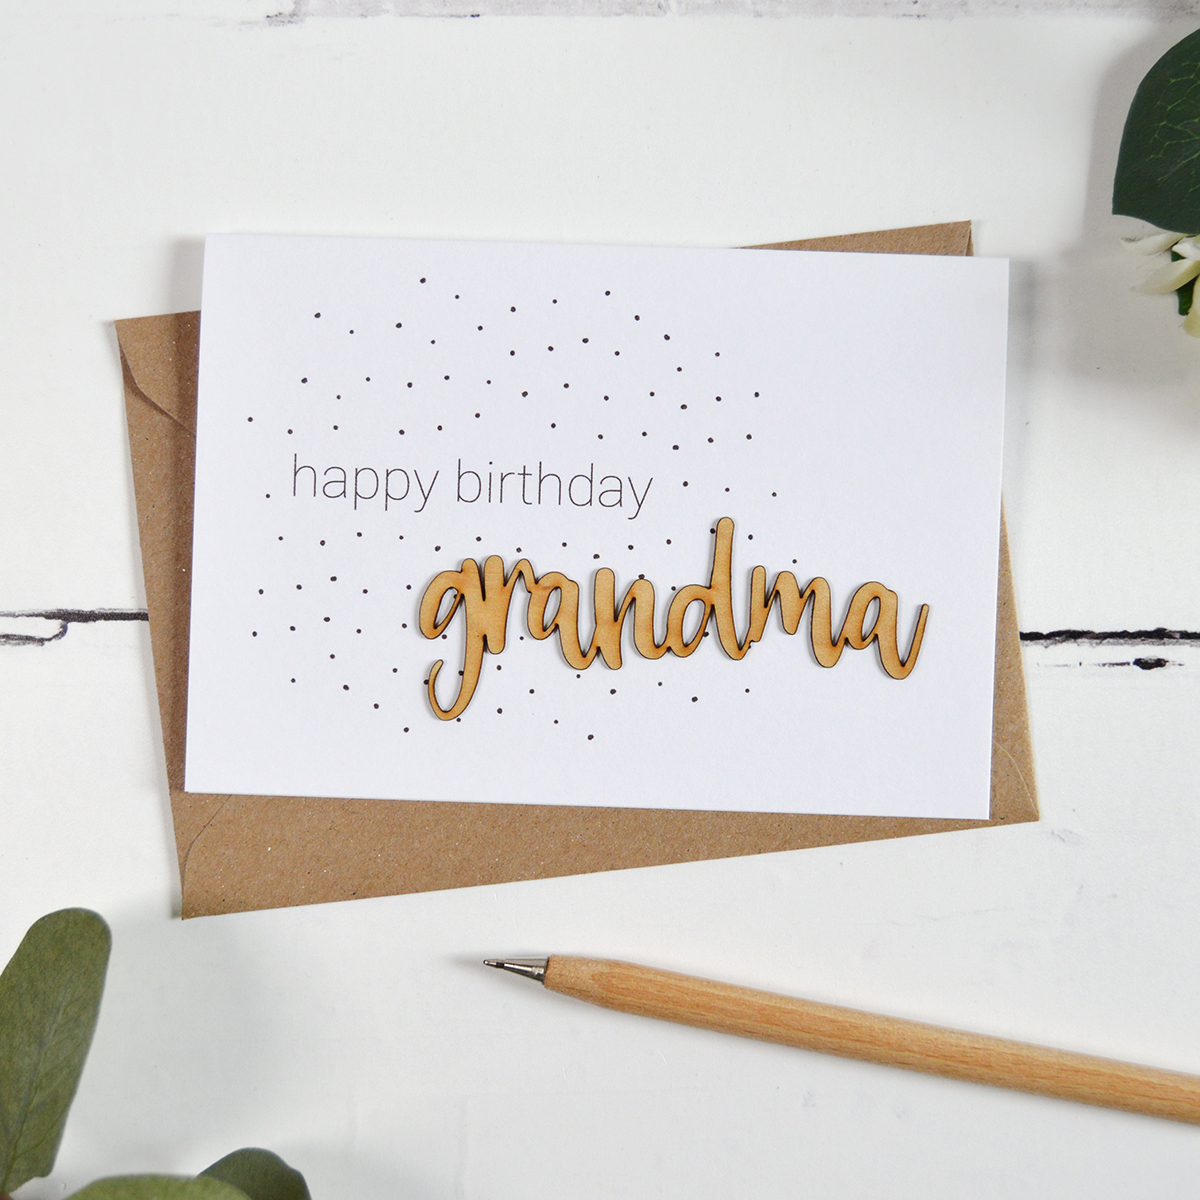 happy_birthday_grandma_sm